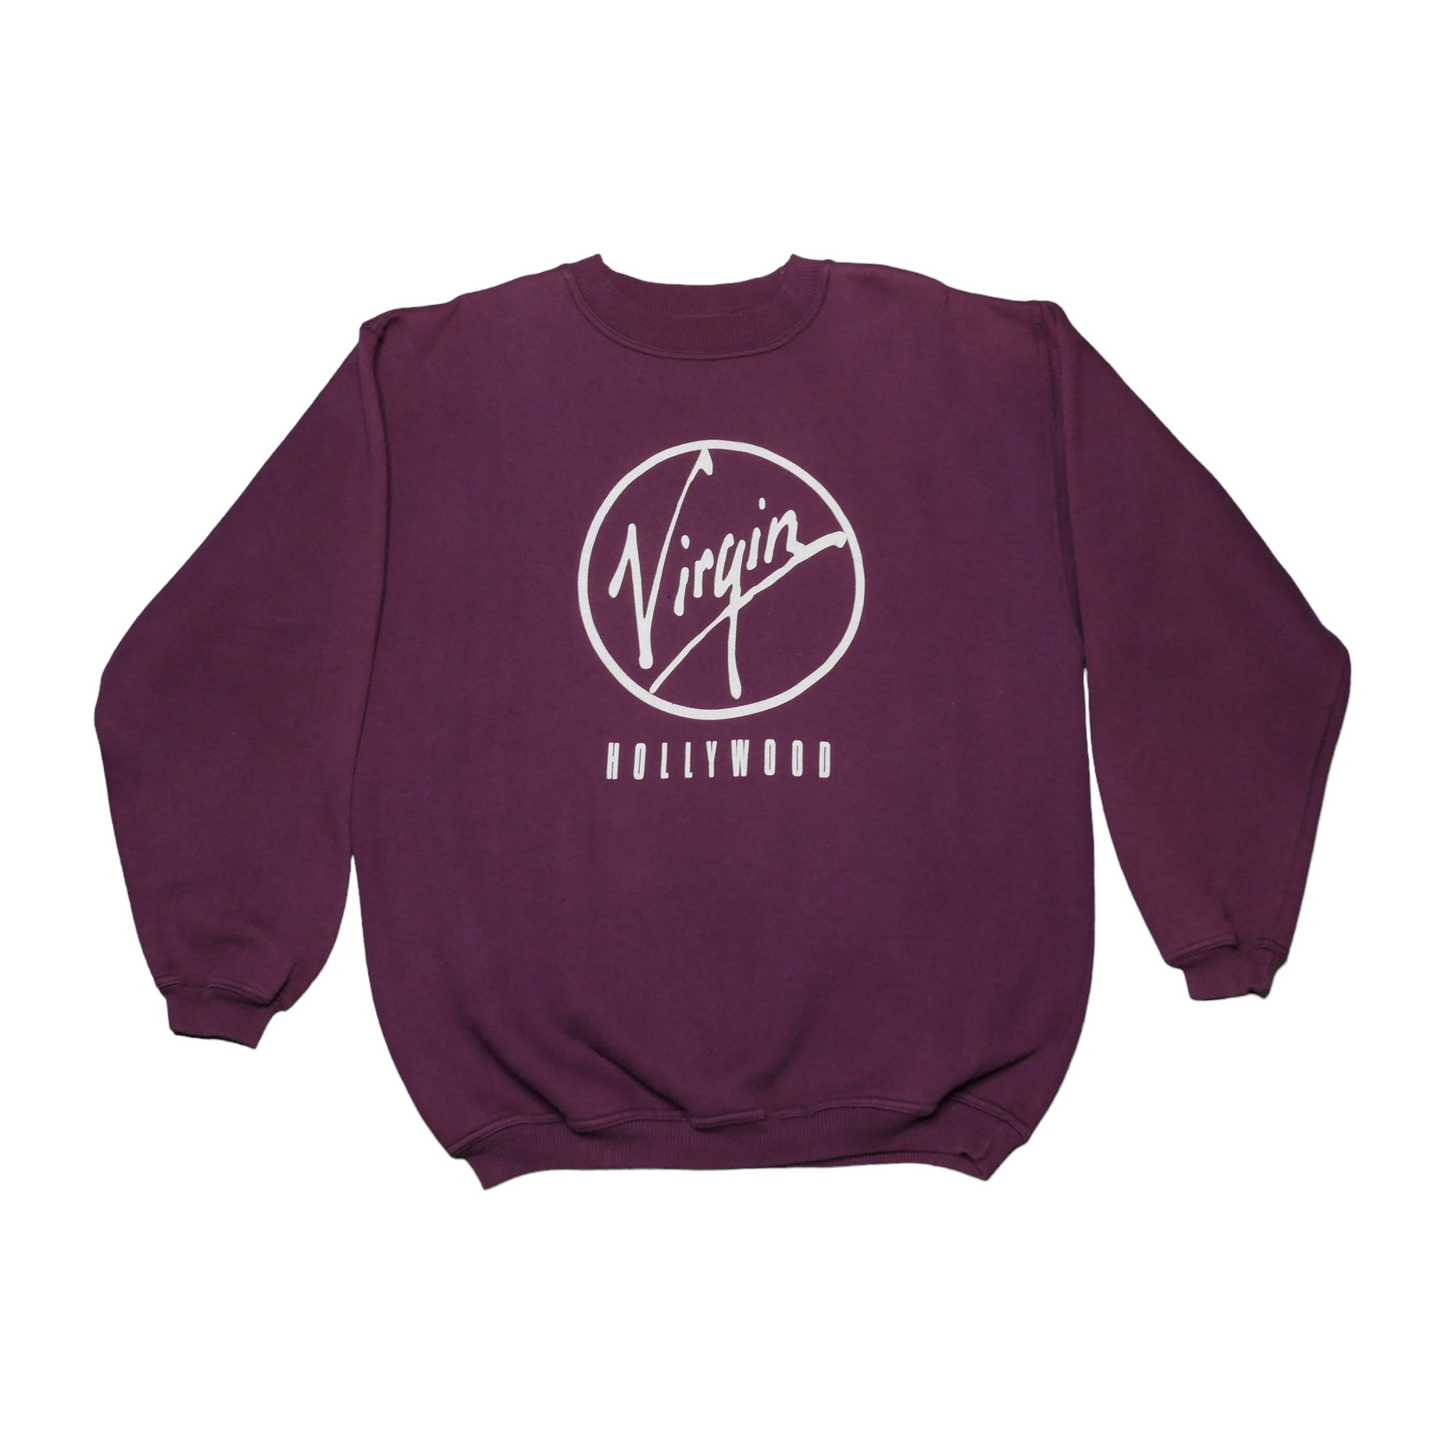 Virgin Hollywood Crewneck Sweatshirt - Medium